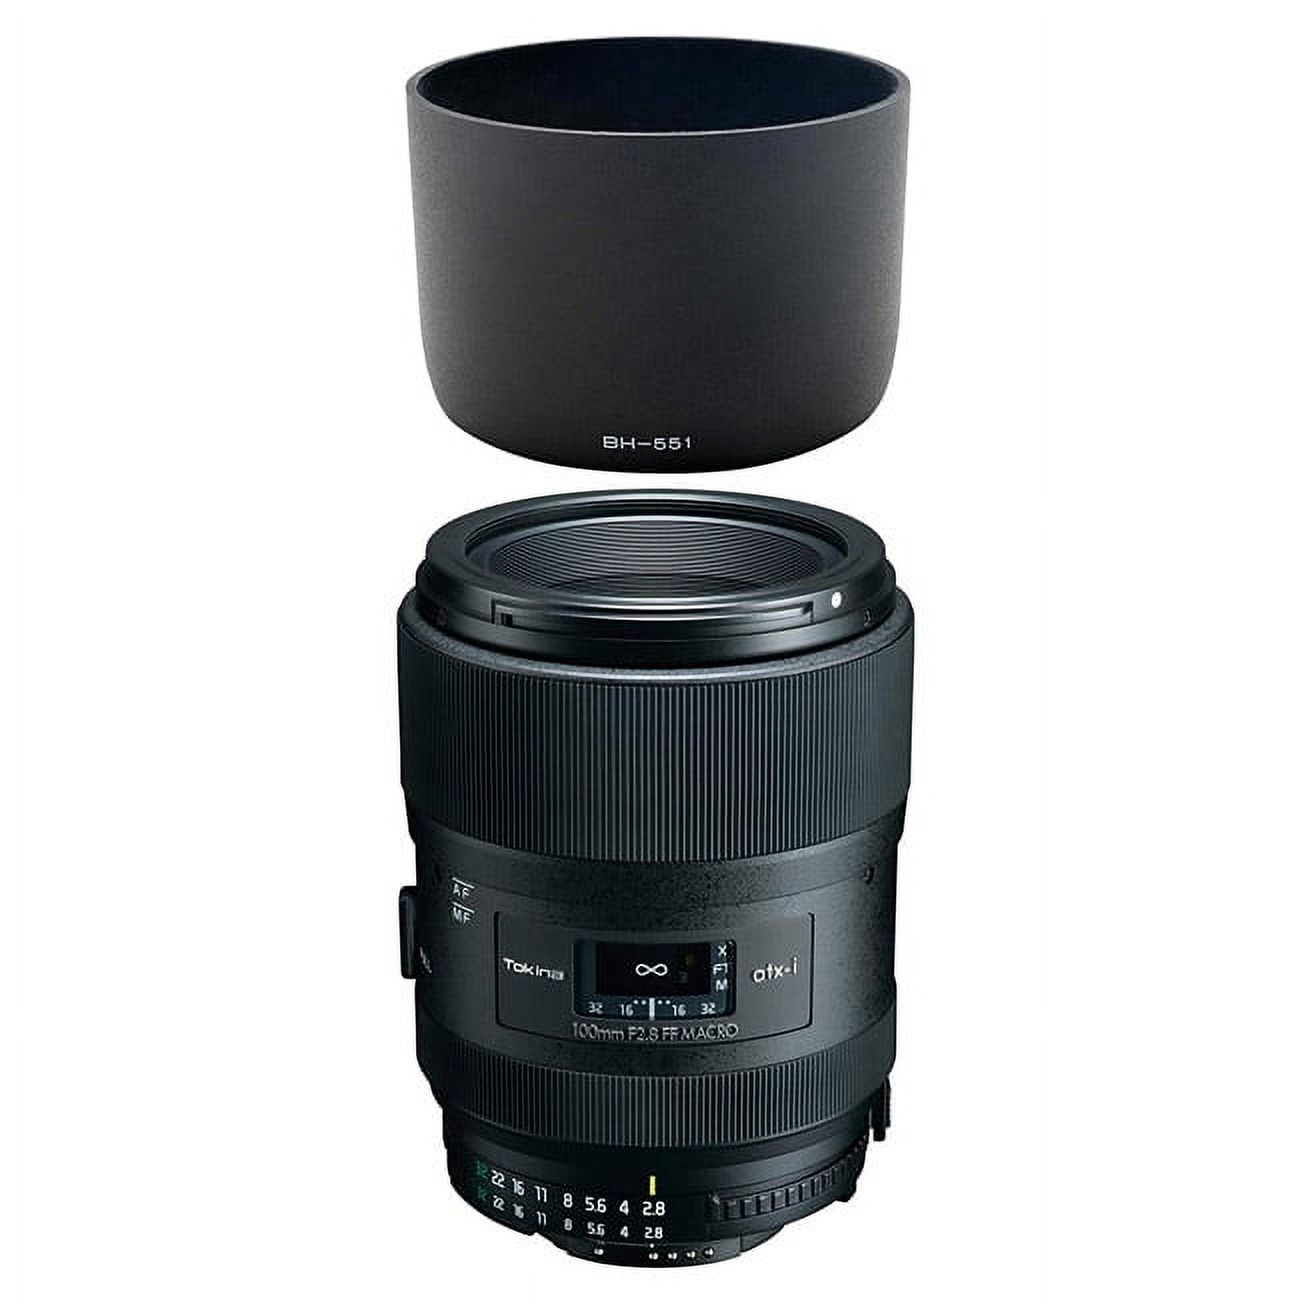 atx-i 100mm f/2.8 Macro Lens for Nikon F - image 1 of 4